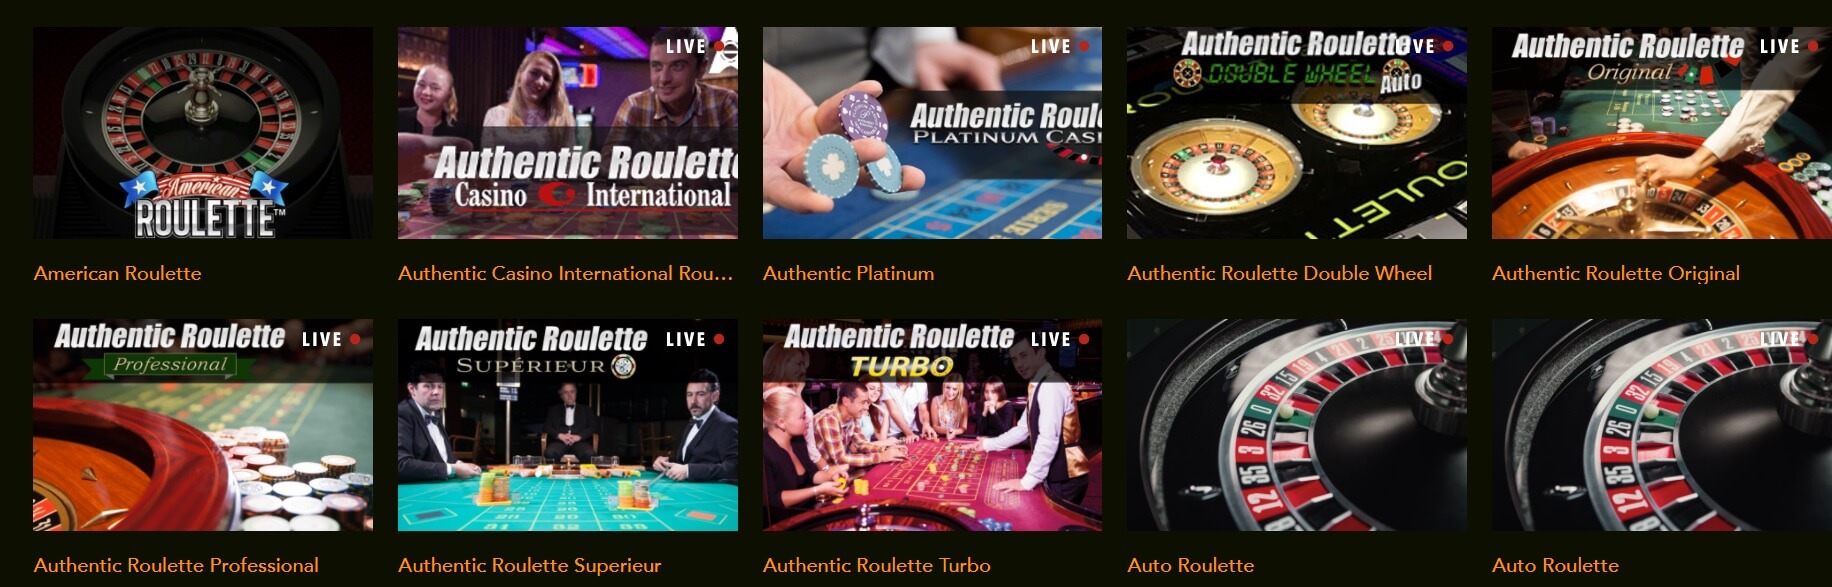 roulette games online - best casinos